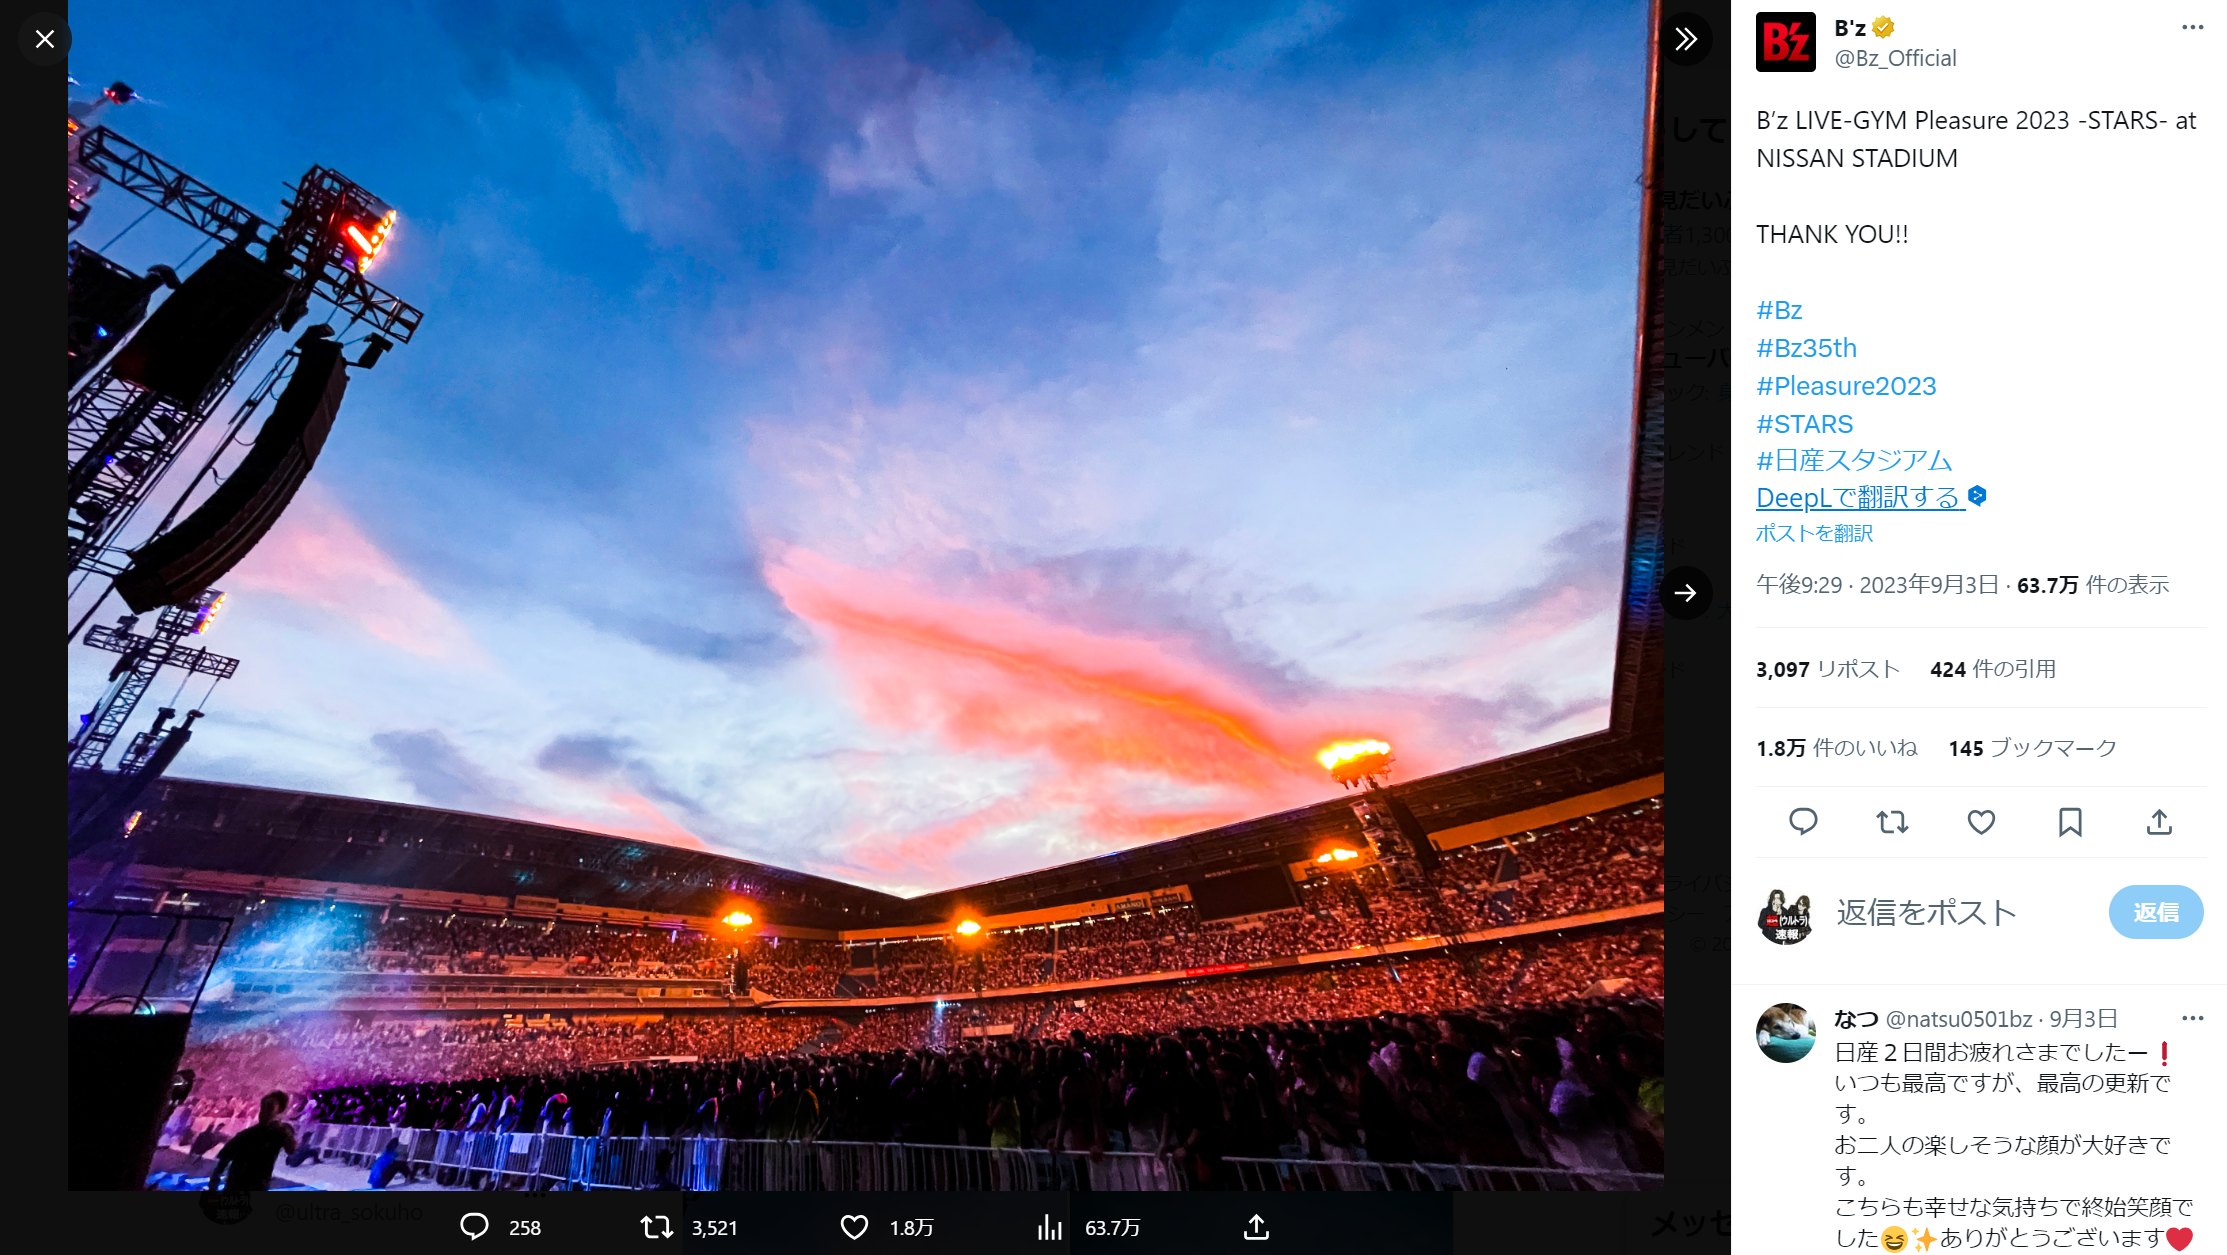 『B'z LIVE-GYM Pleasure 2023 -STARS-』日産スタジアム公演でみられた夕空の写真